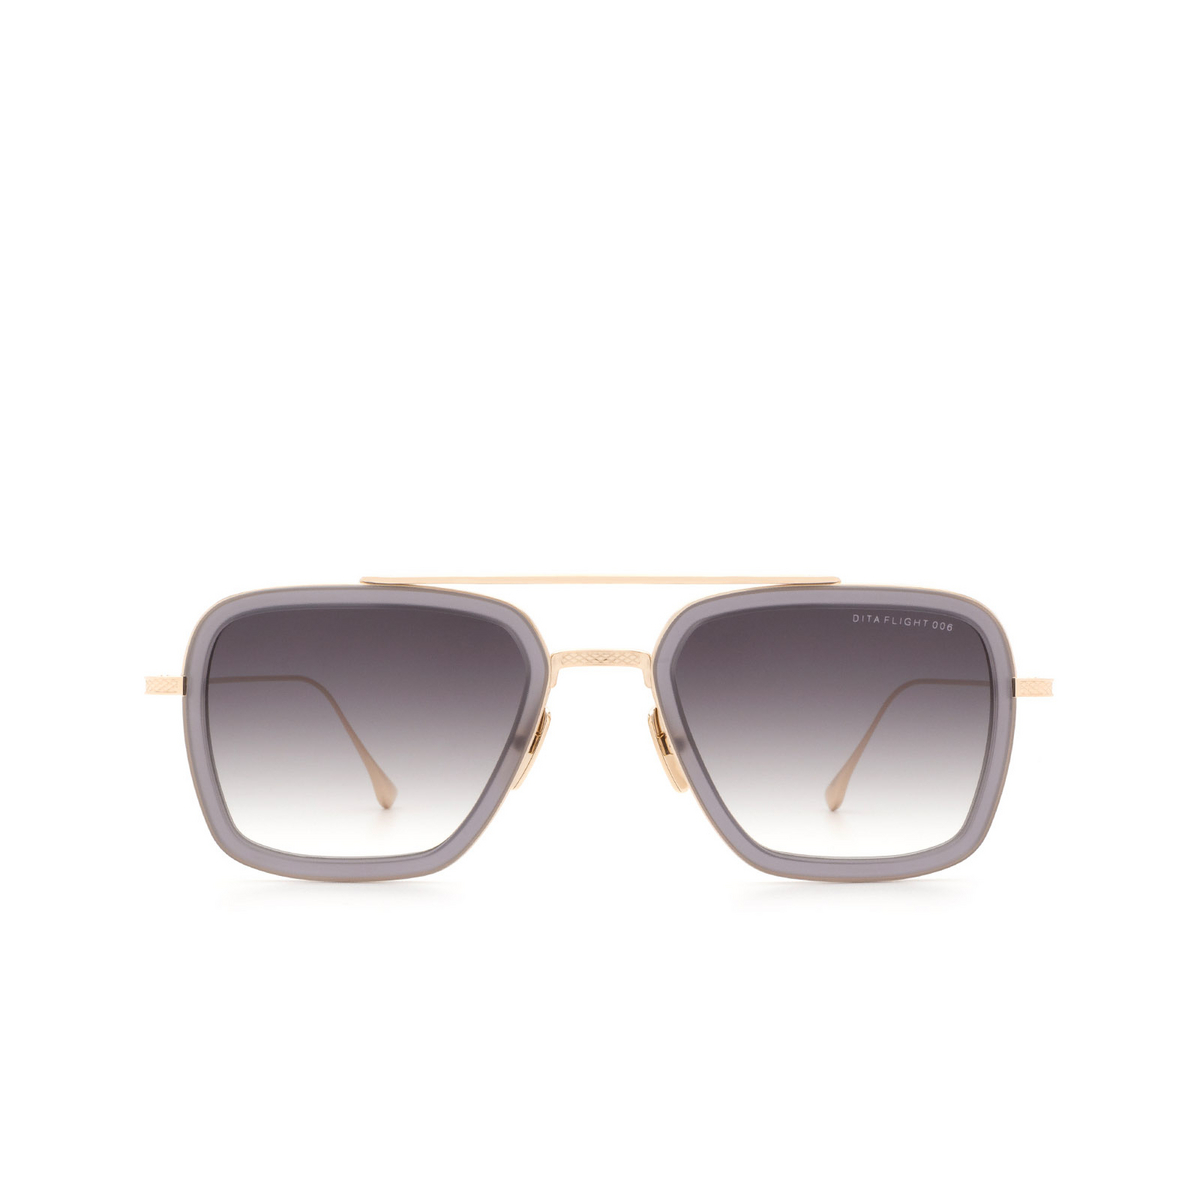 Dita FLIGHT.006 Sunglasses GRY-GLD Grey Gold - front view